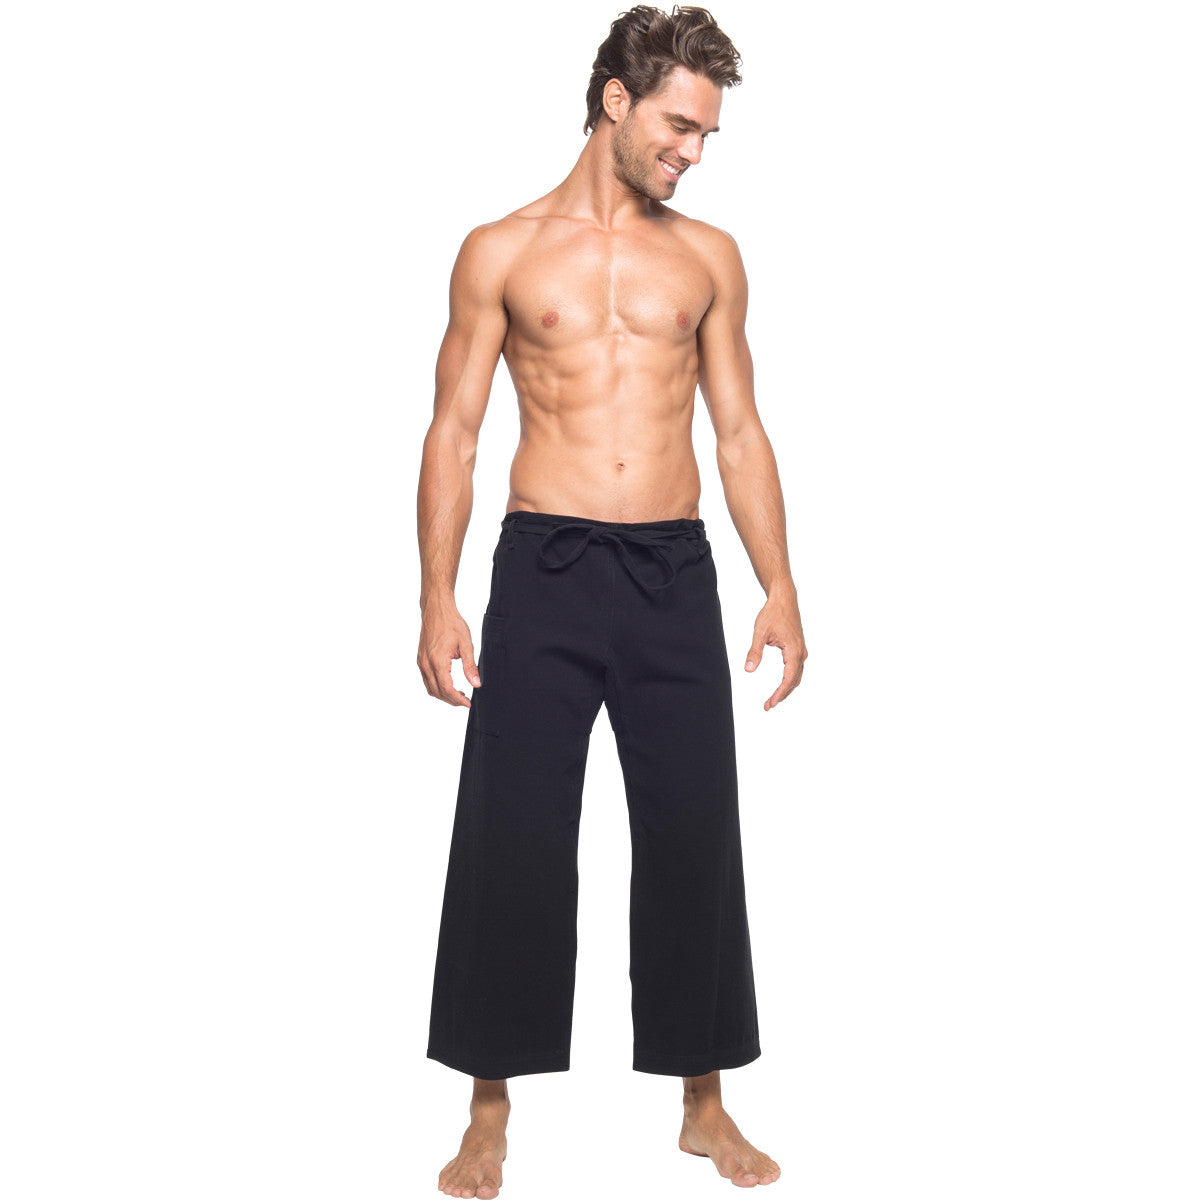 Black Yoga Pants for Men 